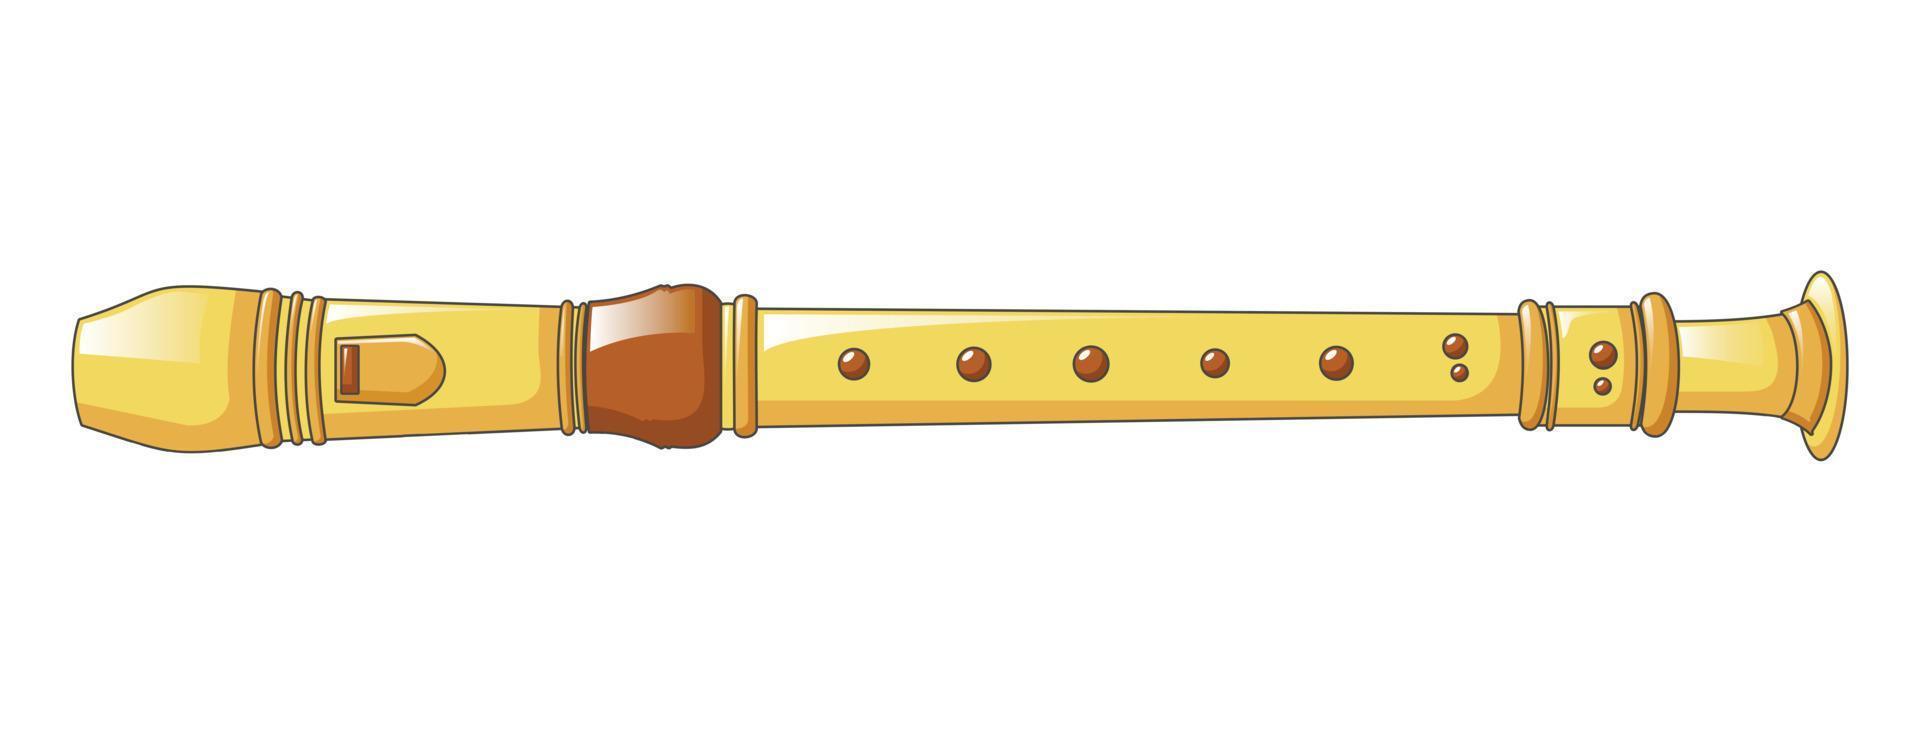 icono de flauta de oro, estilo de dibujos animados vector